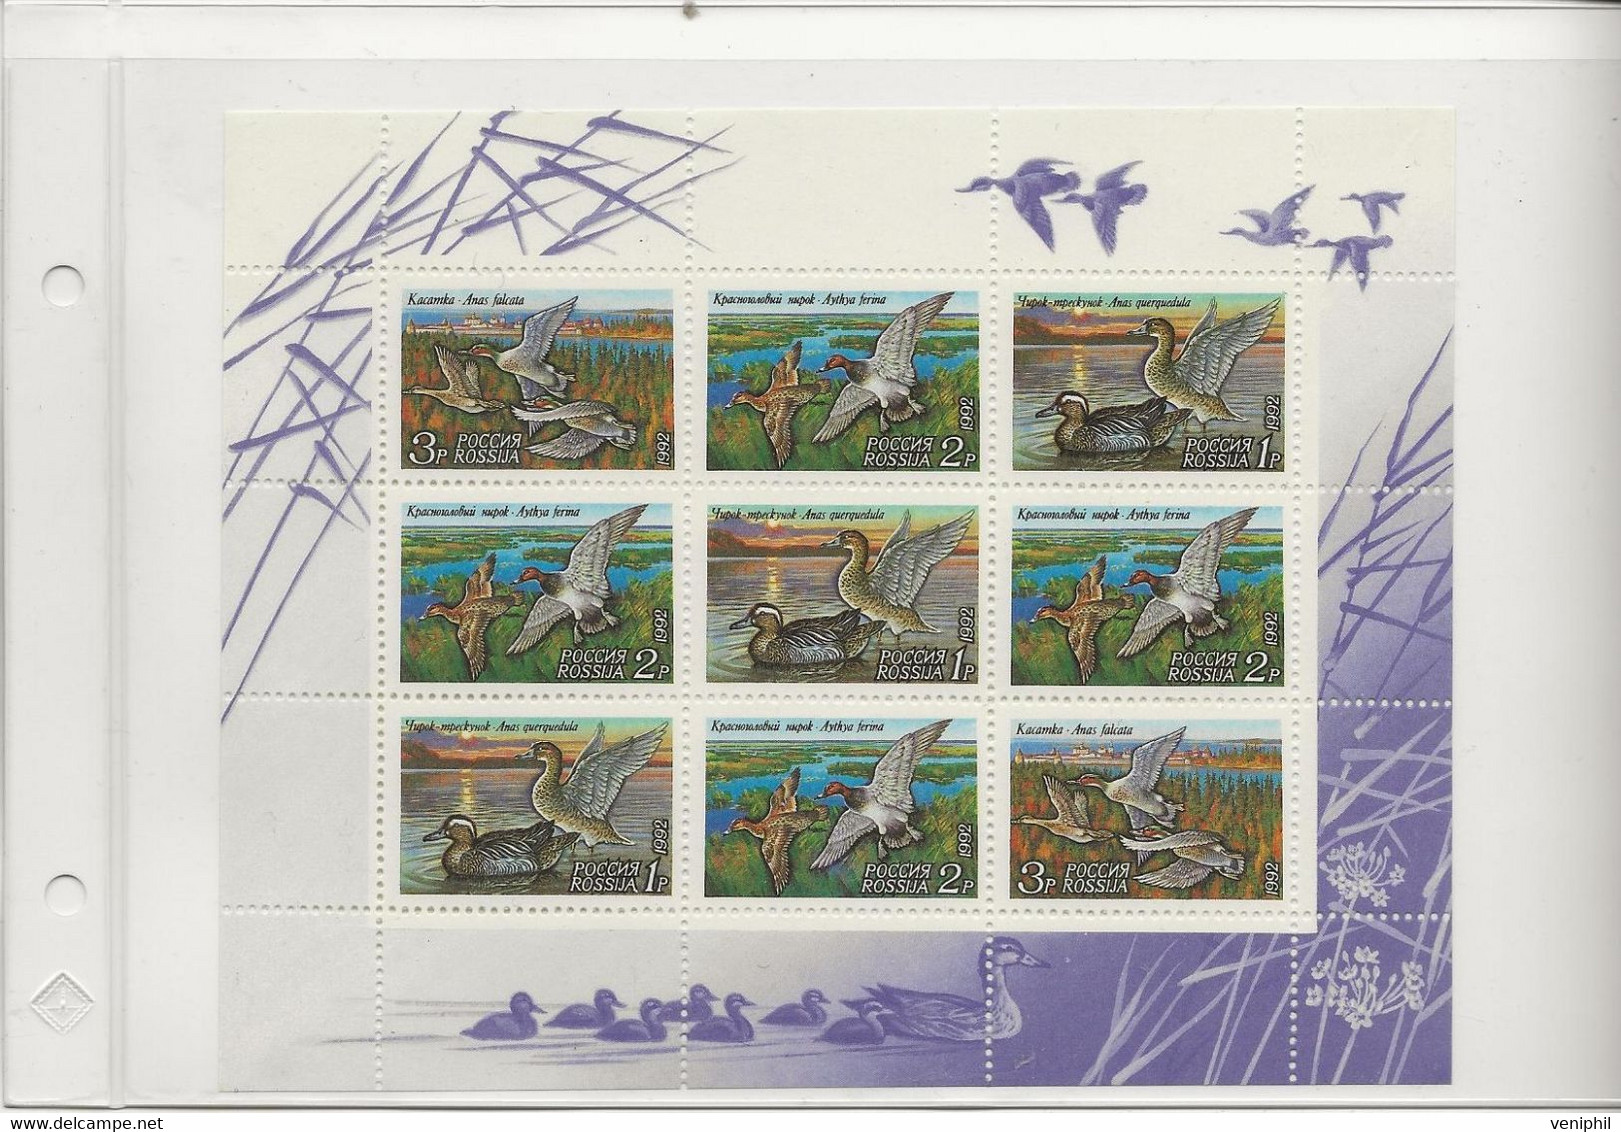 RUSSIE - CANARDS - N° 5958 A 5960 EN FEUILLET -ANNEE 1992 - Blocks & Kleinbögen